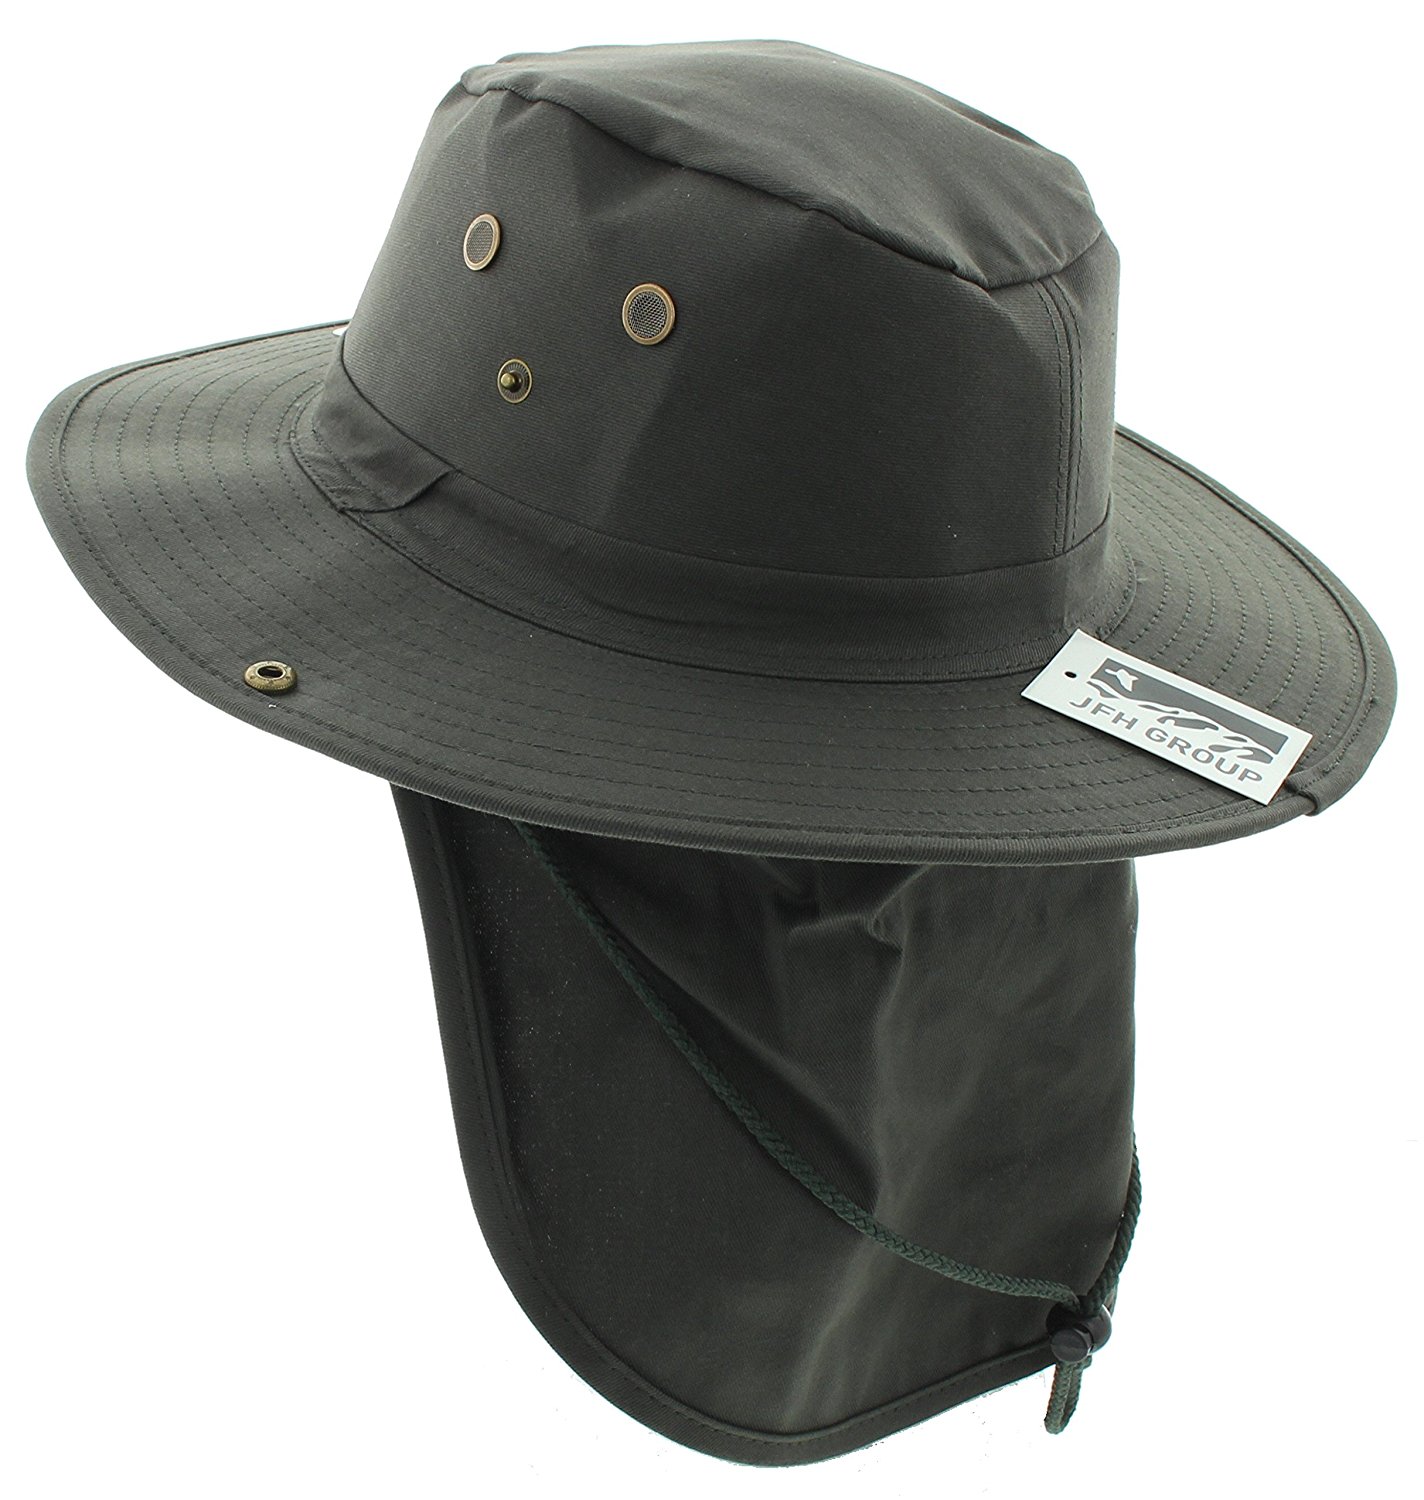 JFH Wide Brim Bora Booney Outdoor Safari Summer Hat w/Neck Flap & Sun Protection - image 1 of 1